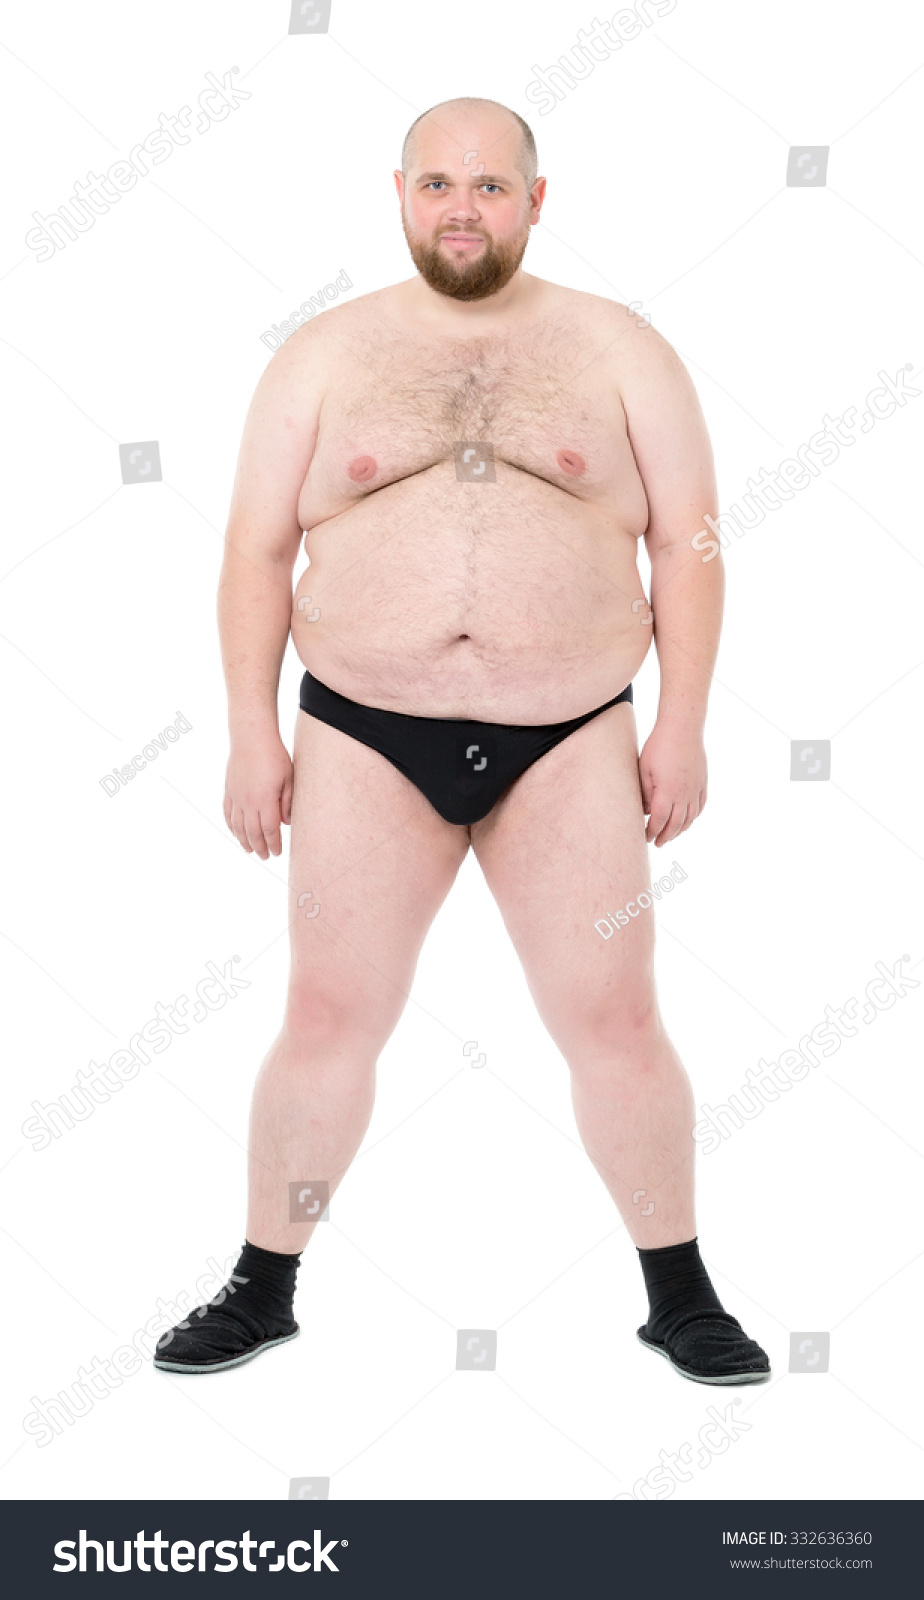 Judith Bohle Desnudo Man Half Naked Fat